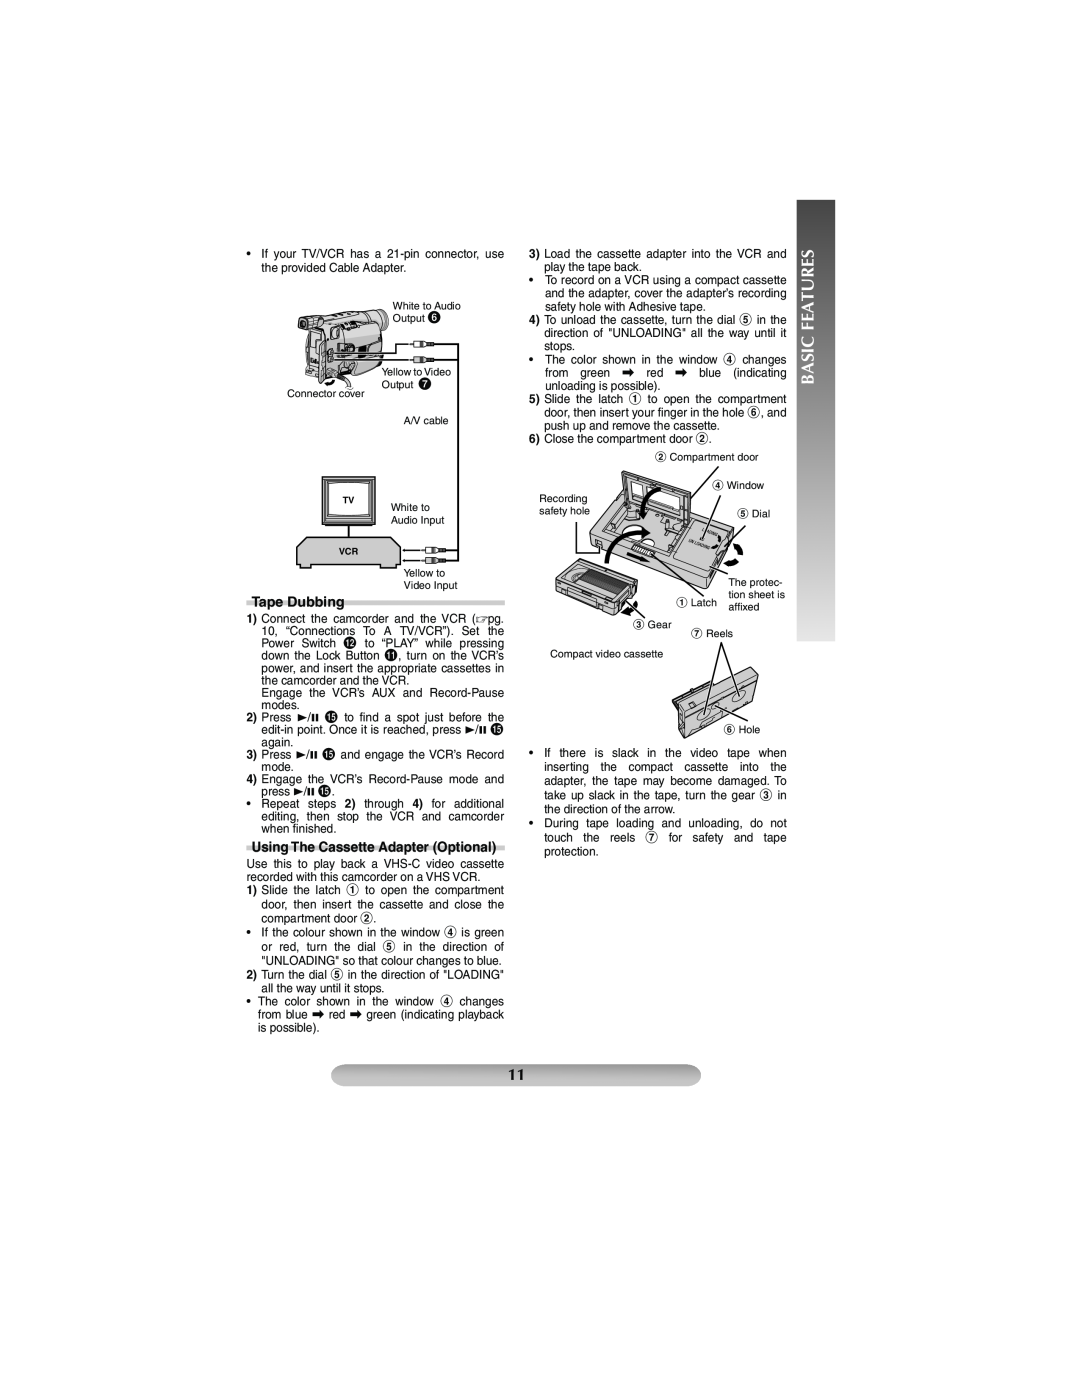 JVC GR-FX17, GR-FXM41 manual Tape Dubbing, Using The Cassette Adapter Optional, Basic Features 